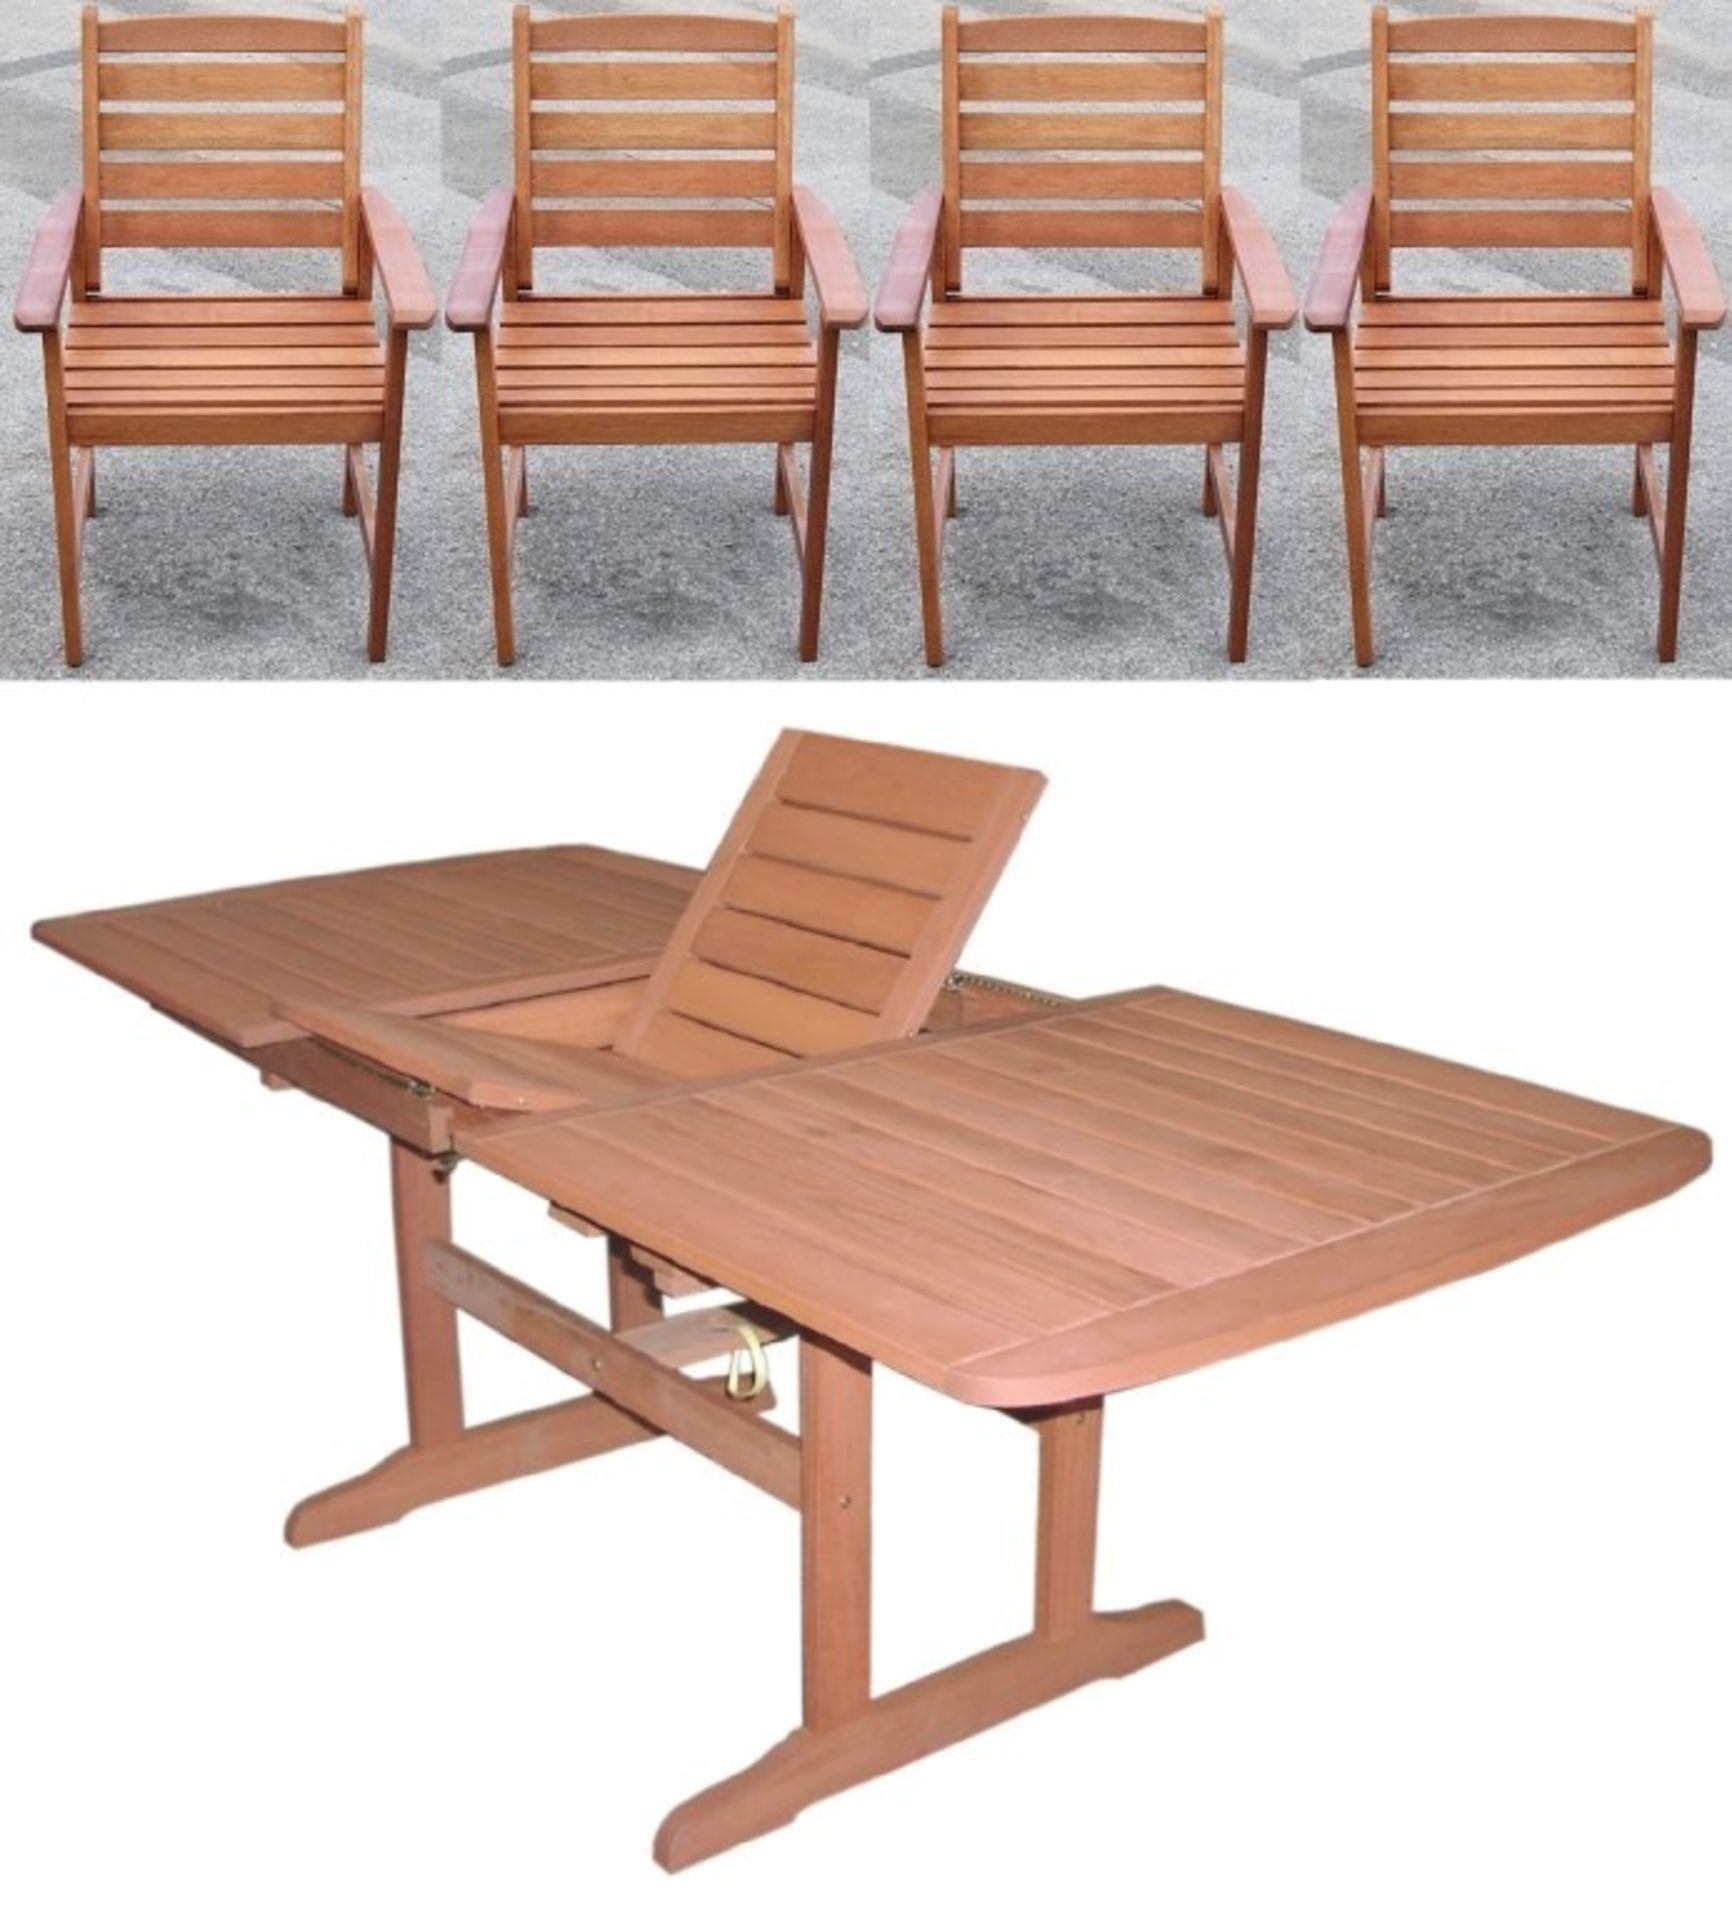 5-Piece Garden Furniture Set Includes 1 x Table Extending (Rectangular) & 4 x Armchairs - Made